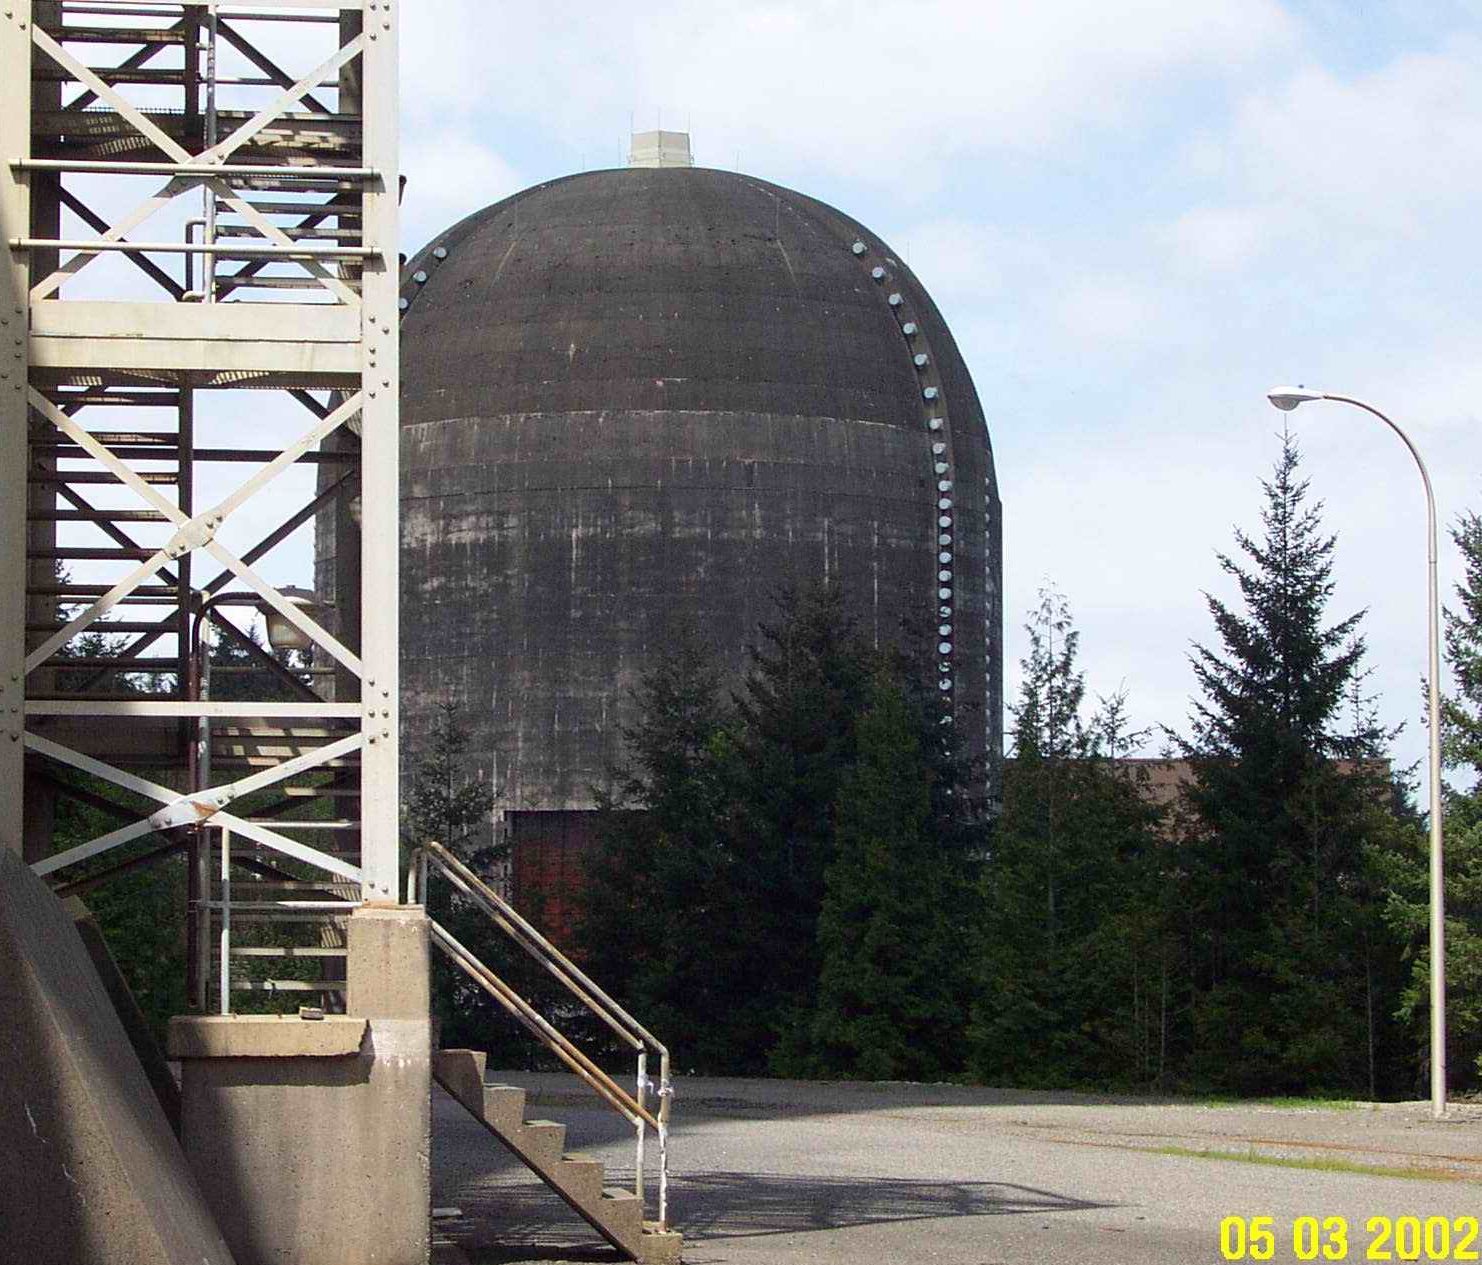 BFRT
Keywords: Trojan Nuclear Power Plant Rainier Ore (decommissioned)